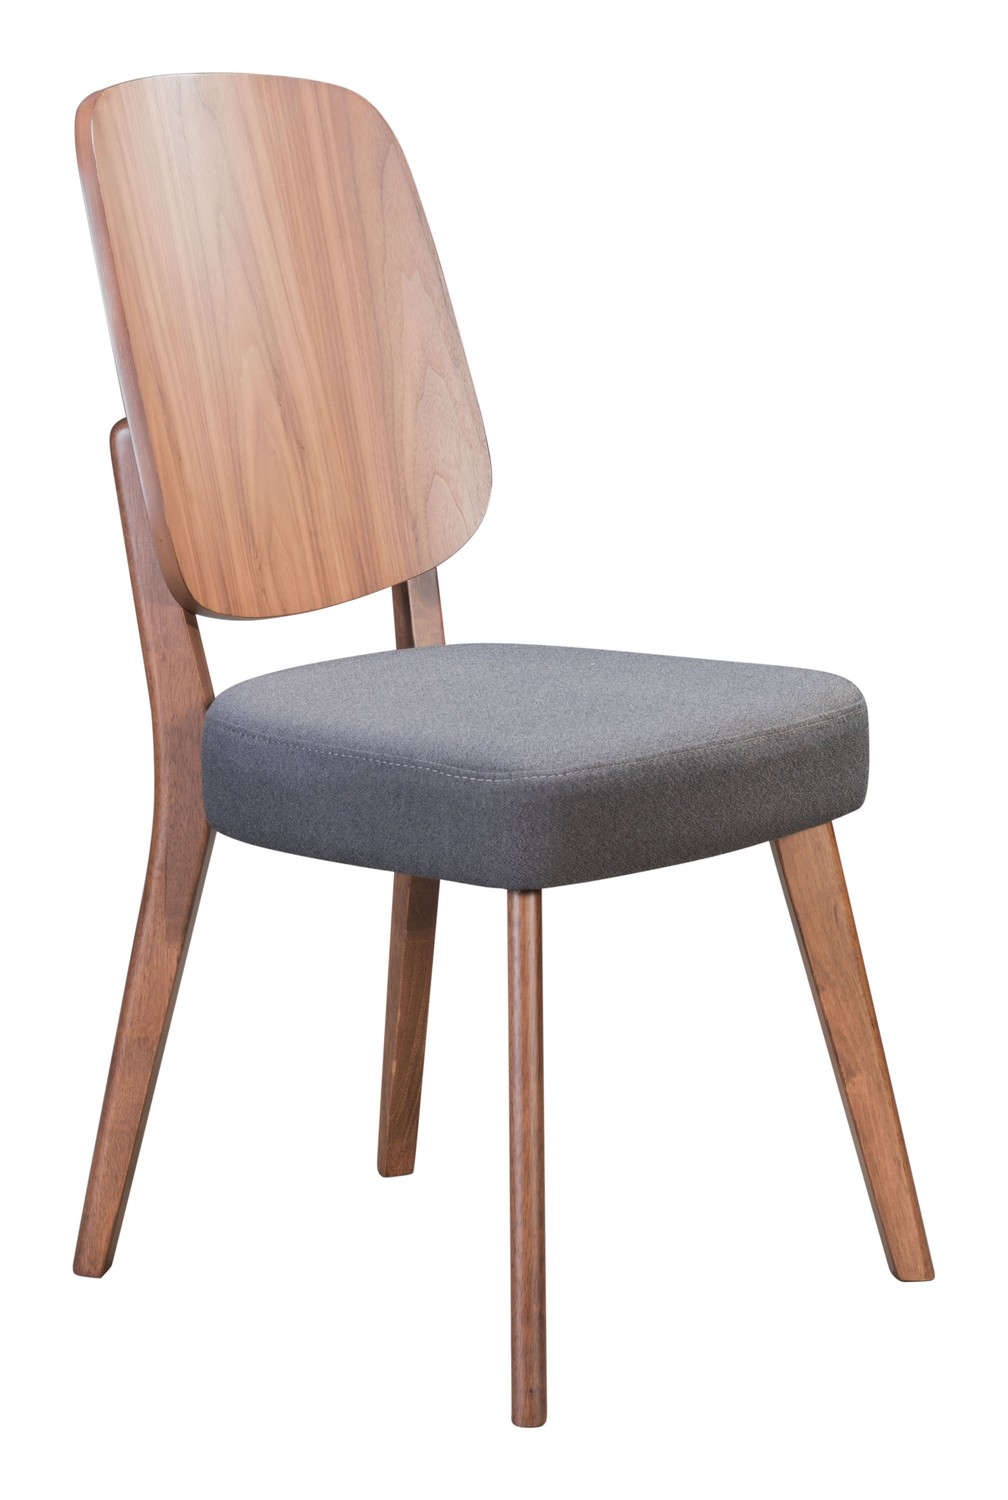 18.9" x 22.4" x 35.4" Walnut & Dark Gray, MDF, Rubber Wood, Dining Chair - Set of 2